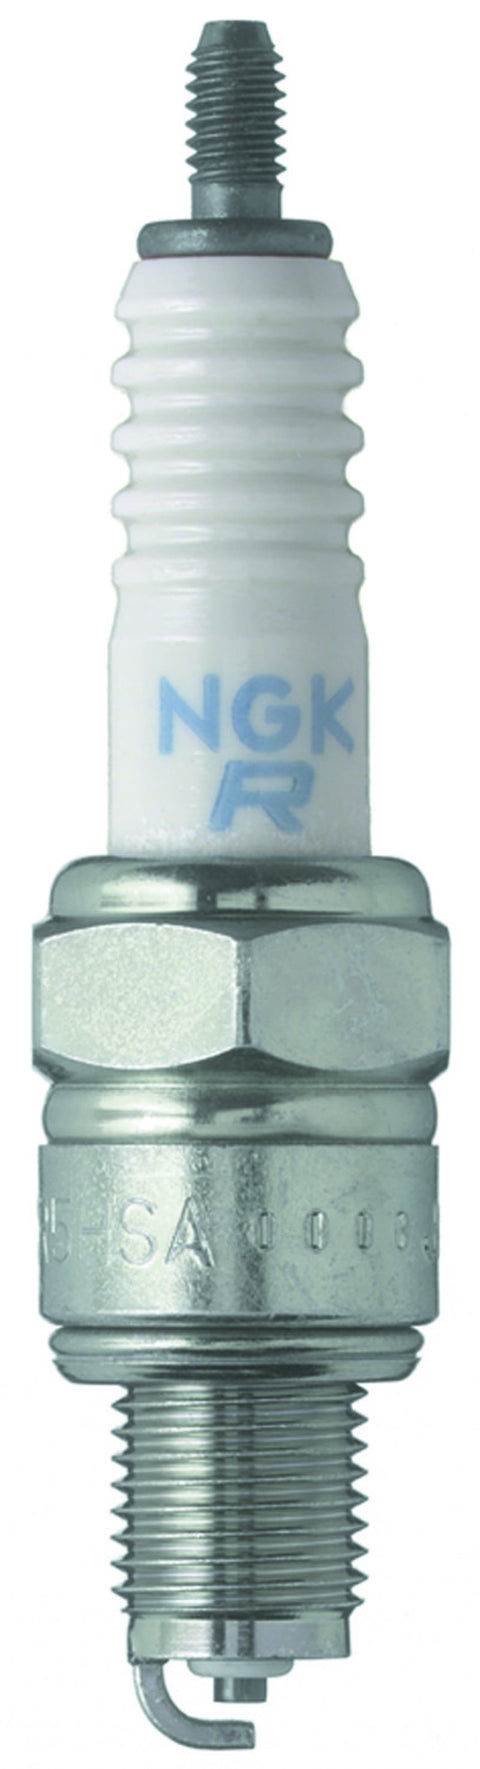 NGK Nickel Heat Range 7 Spark Plug (4549-1)